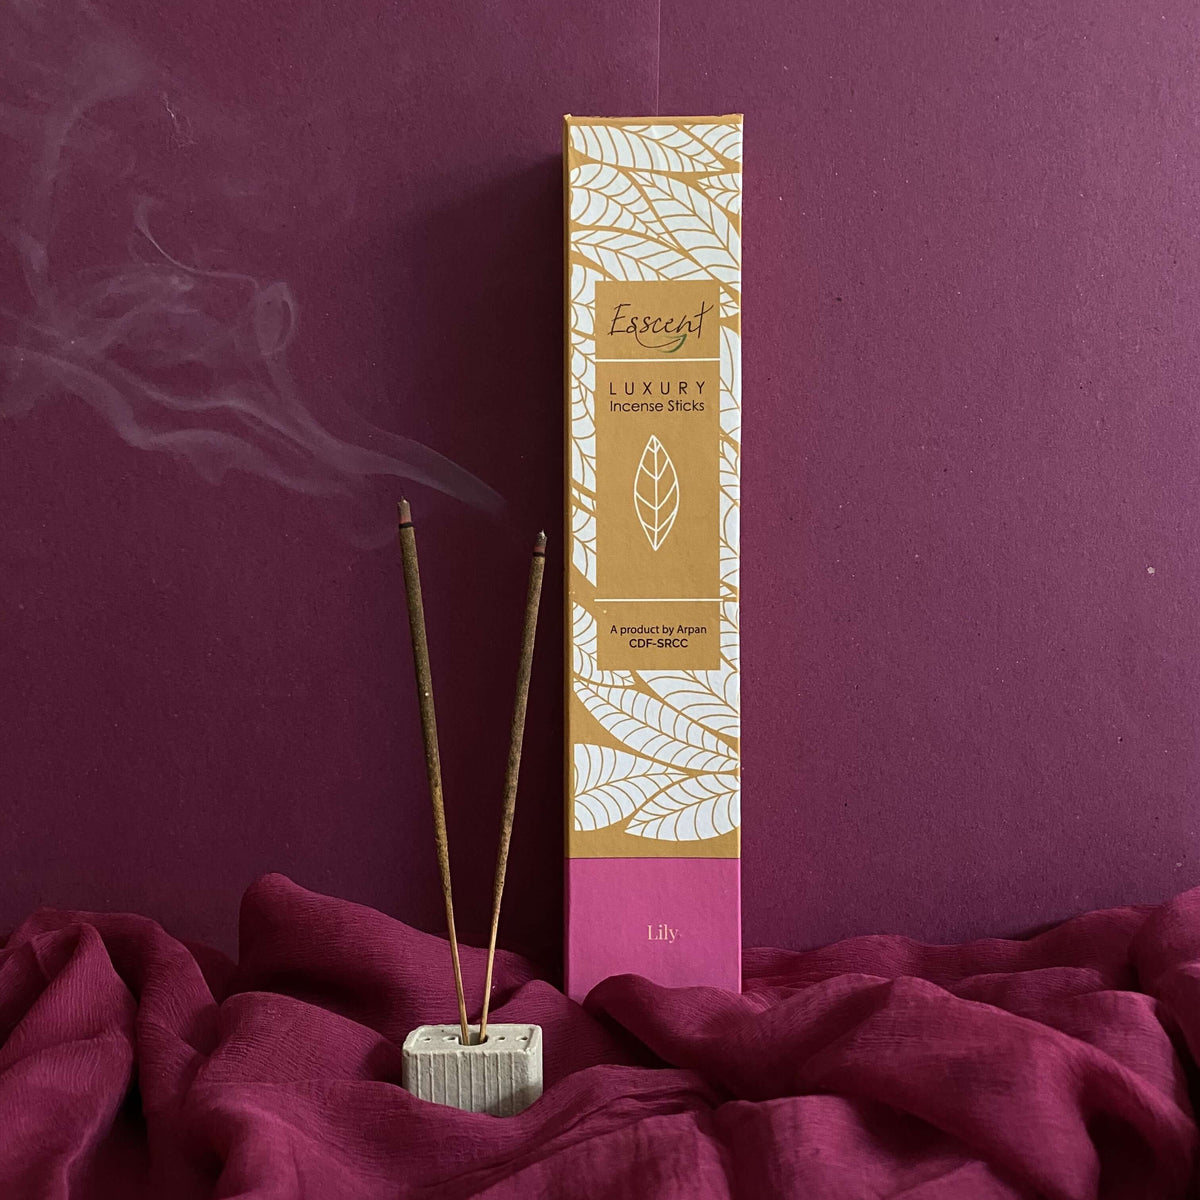 Lily Premium Flower-based Incense Sticks